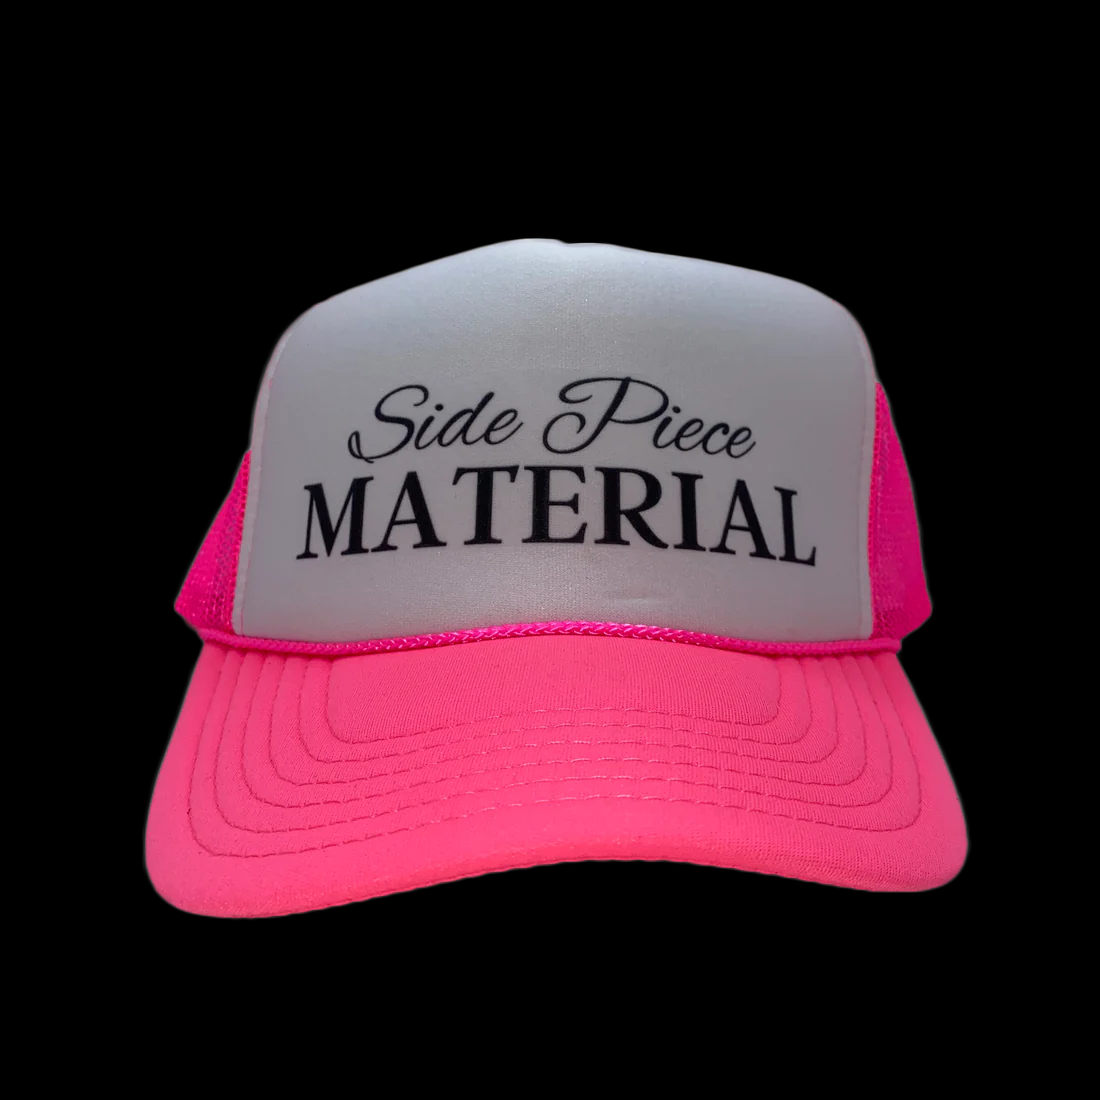 Side Piece Material Trucker Hat